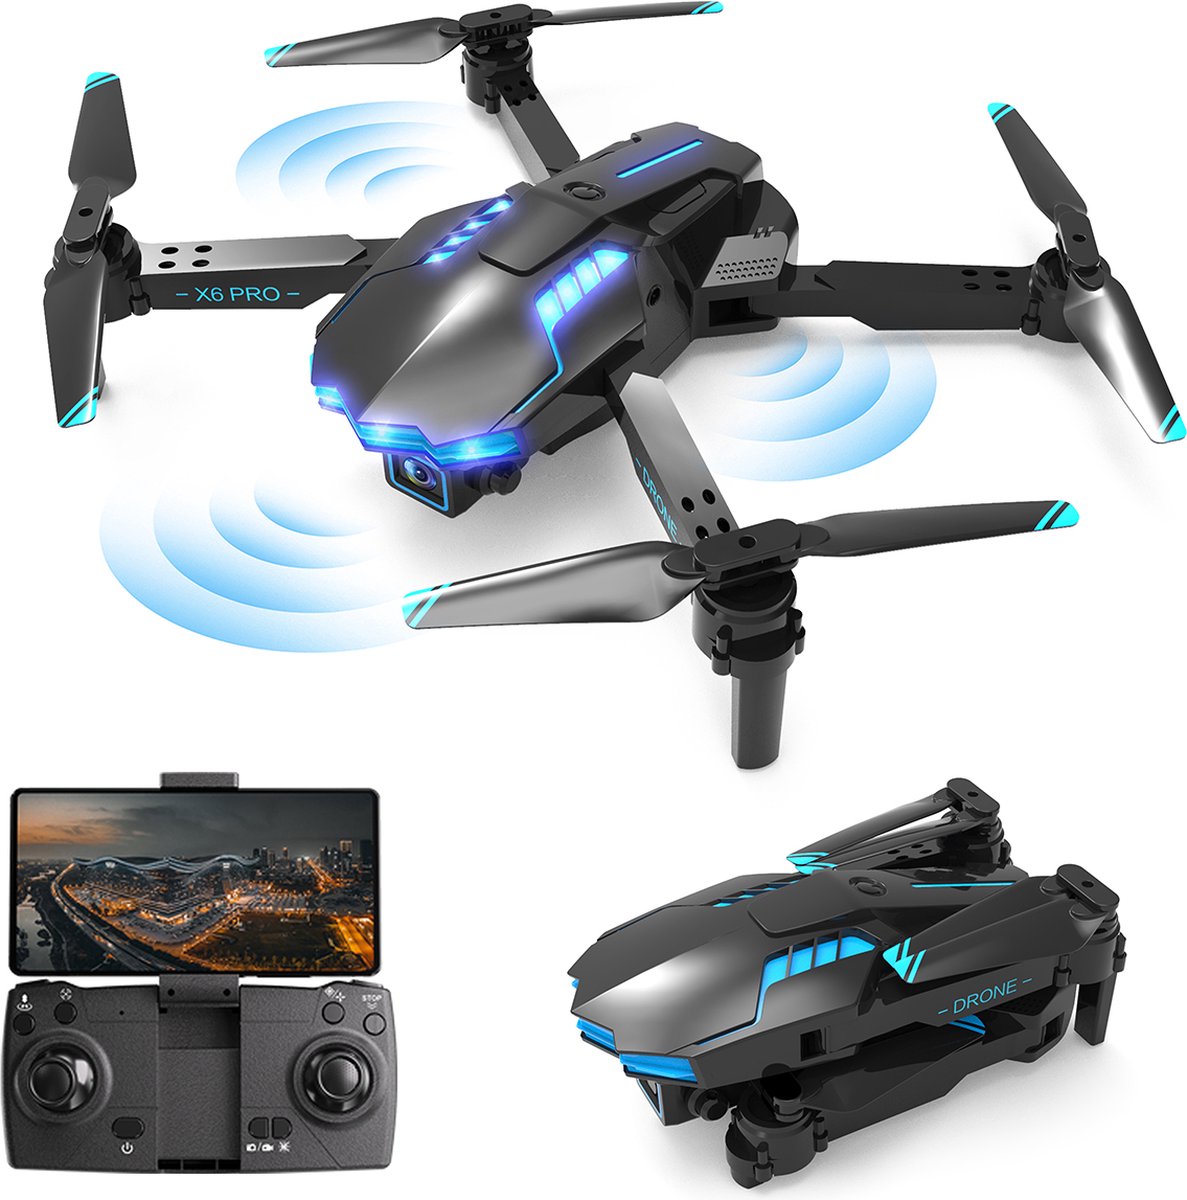 Drone 4K resolutie - XD6 pro - zwart - met wifi functie - Gyro - 2.4ghz - realtime transmissie - Xd Xtreme